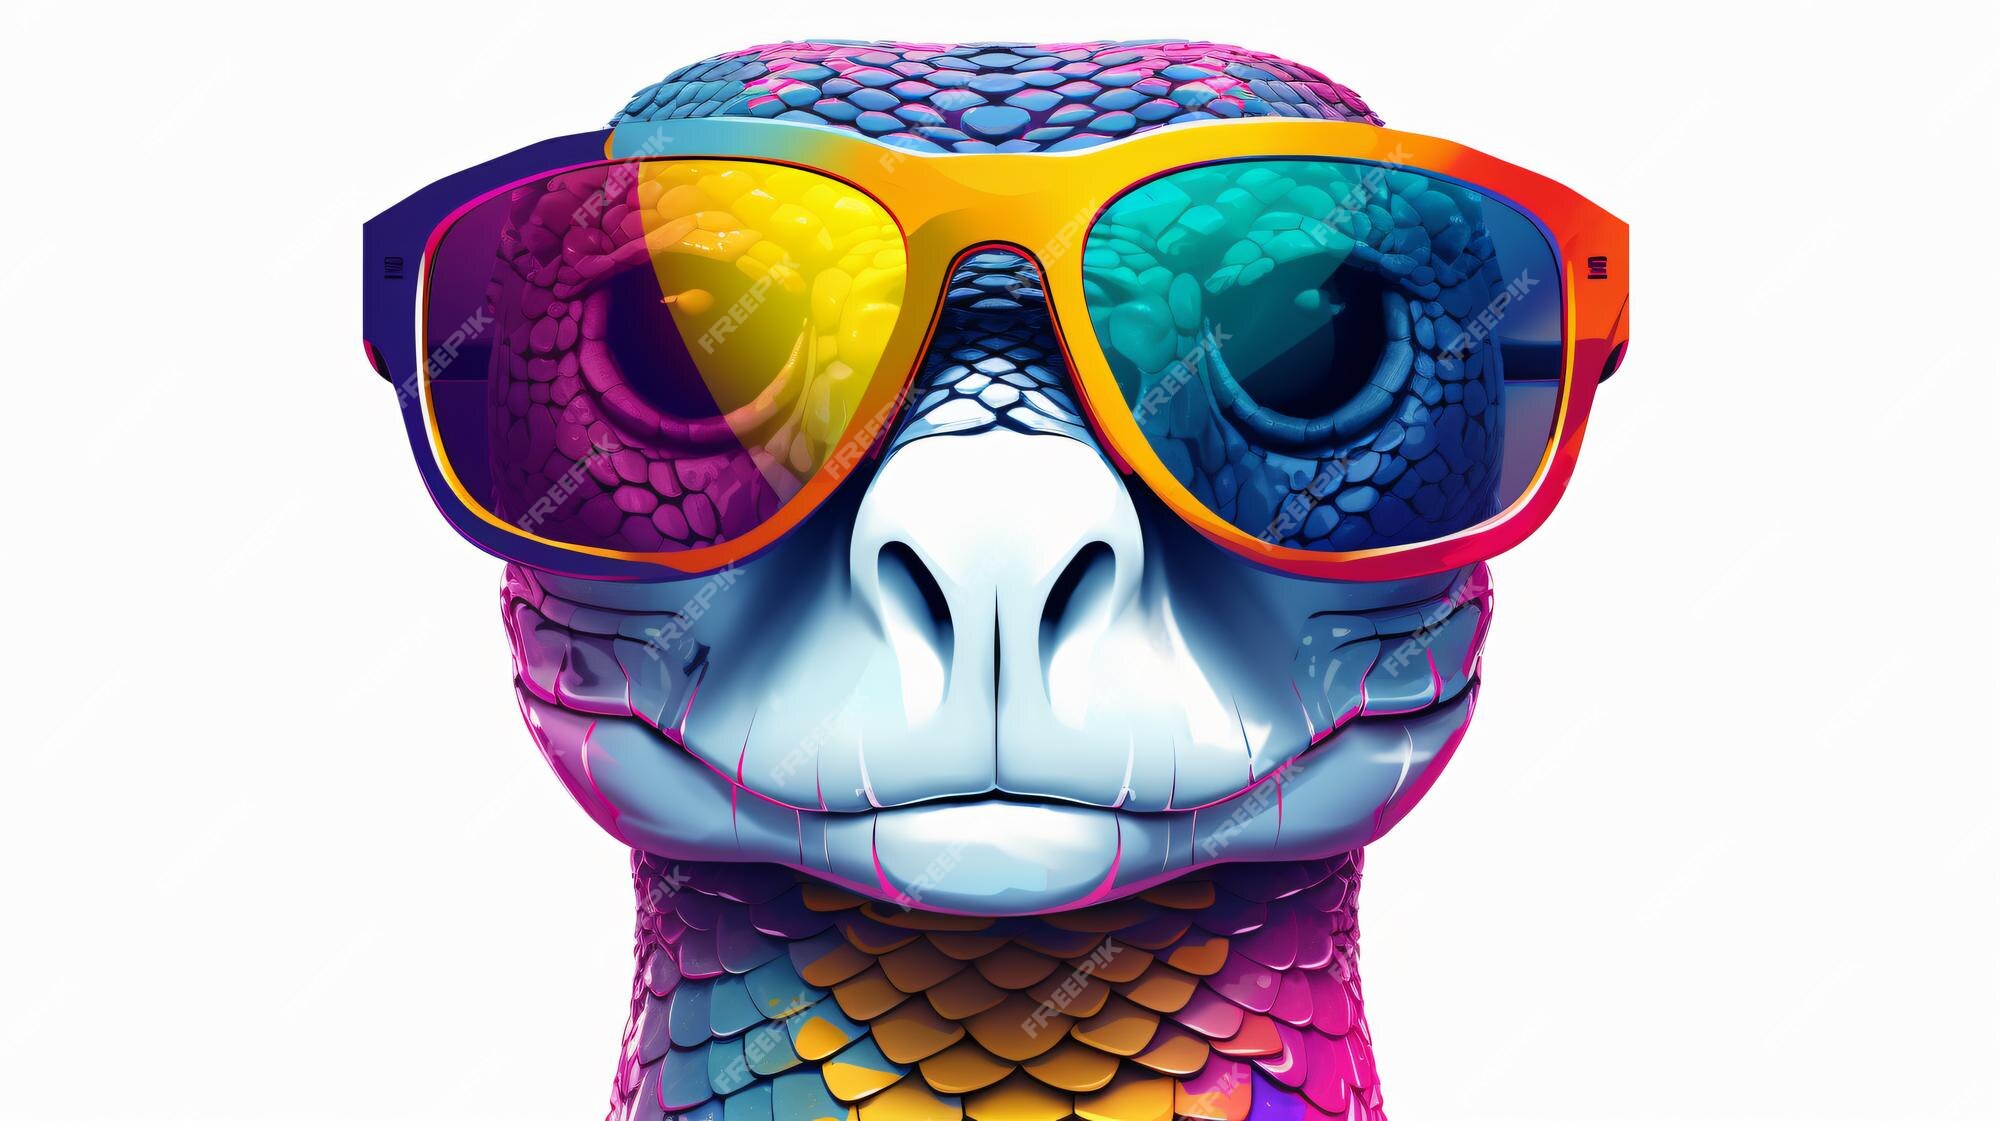 Cobra colorida com óculos de sol isolados